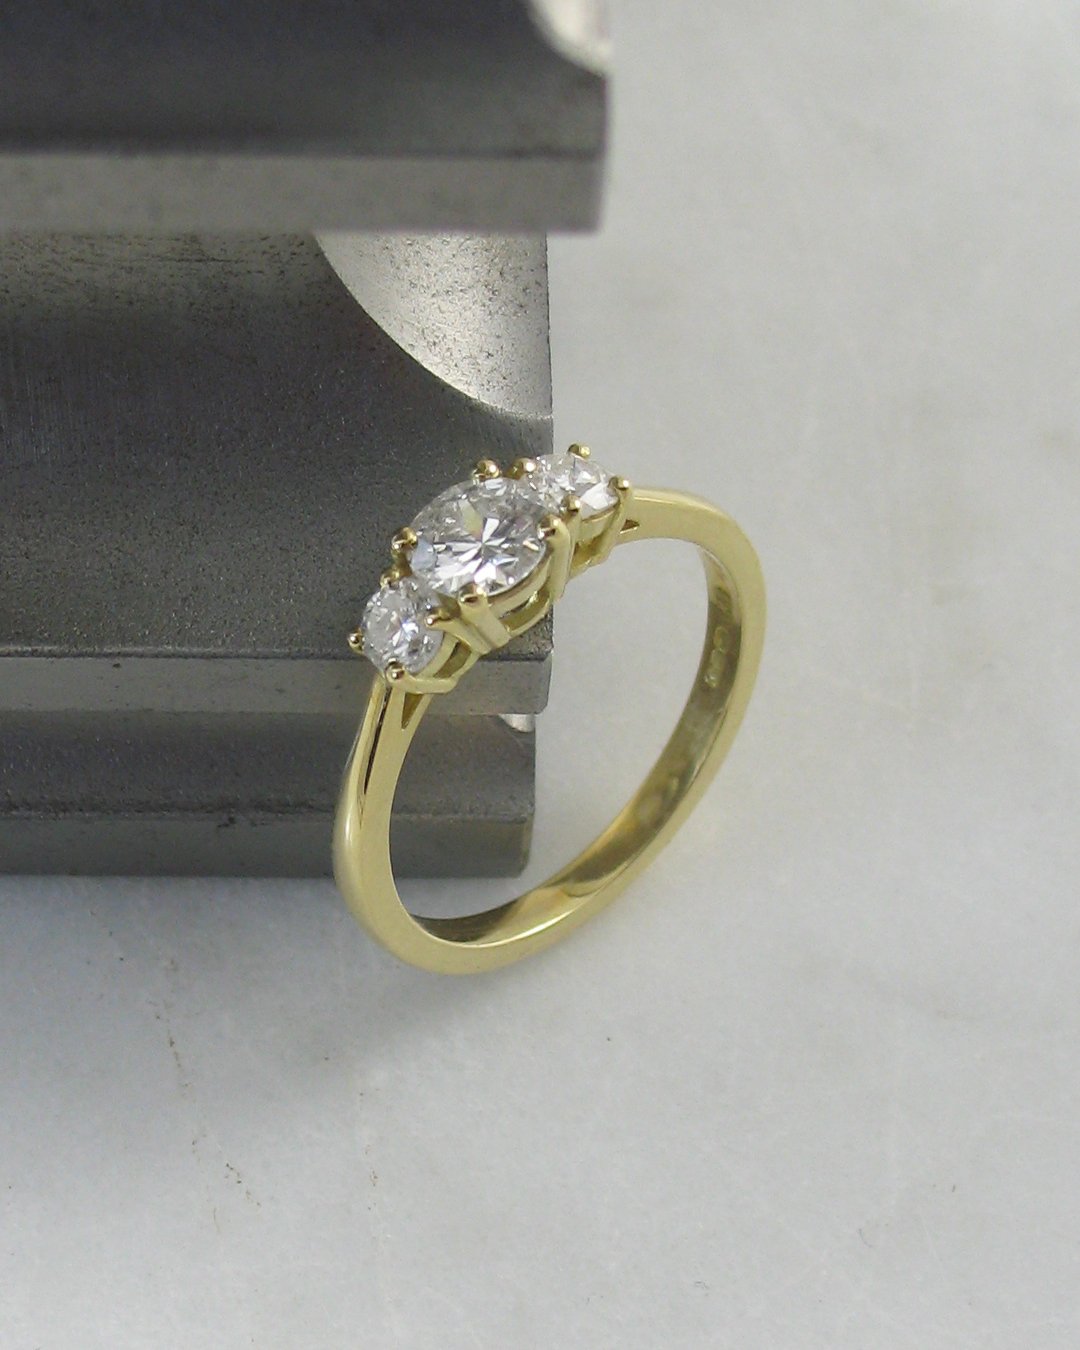 A stunning diamond trilogy ring